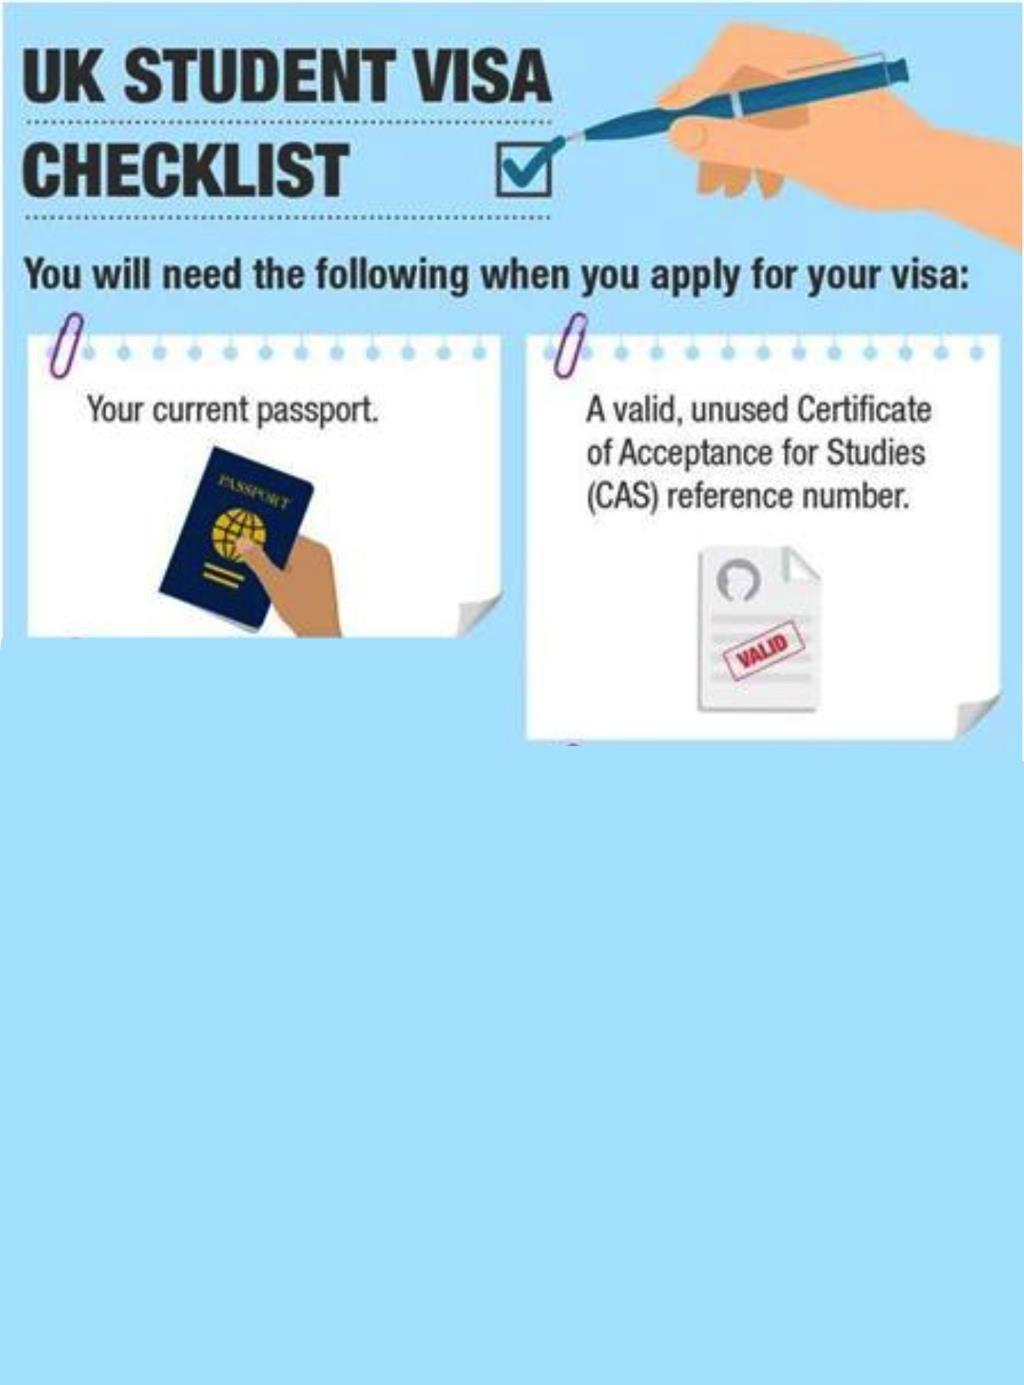 Tier 4 (General) visa 4 + if under